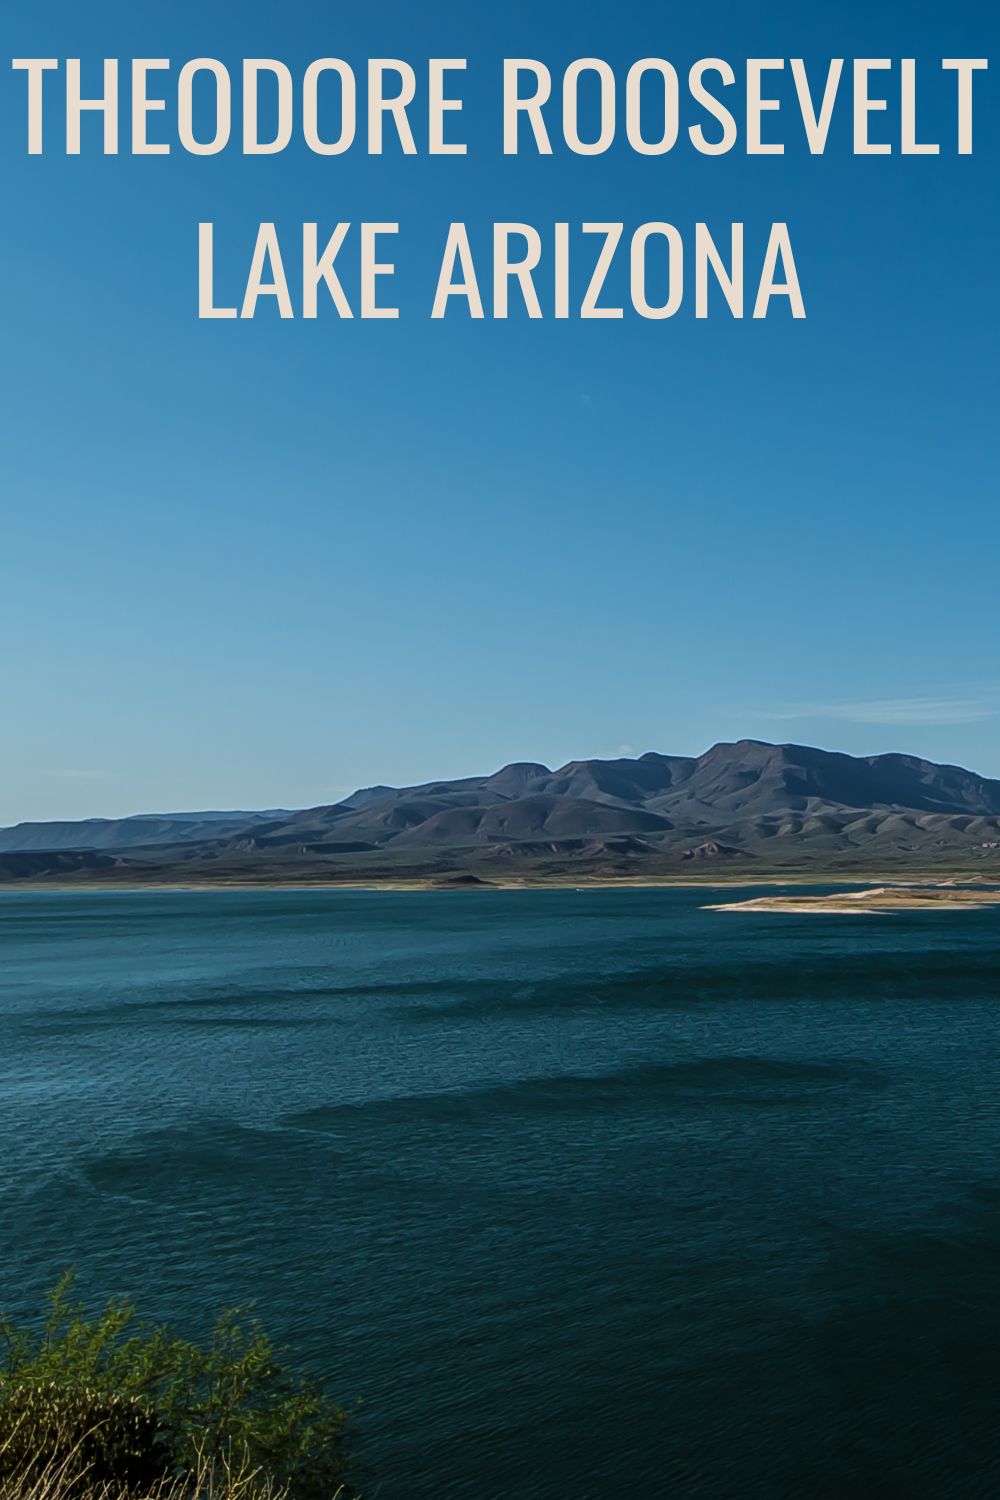 Theodore Roosevelt Lake Arizona.